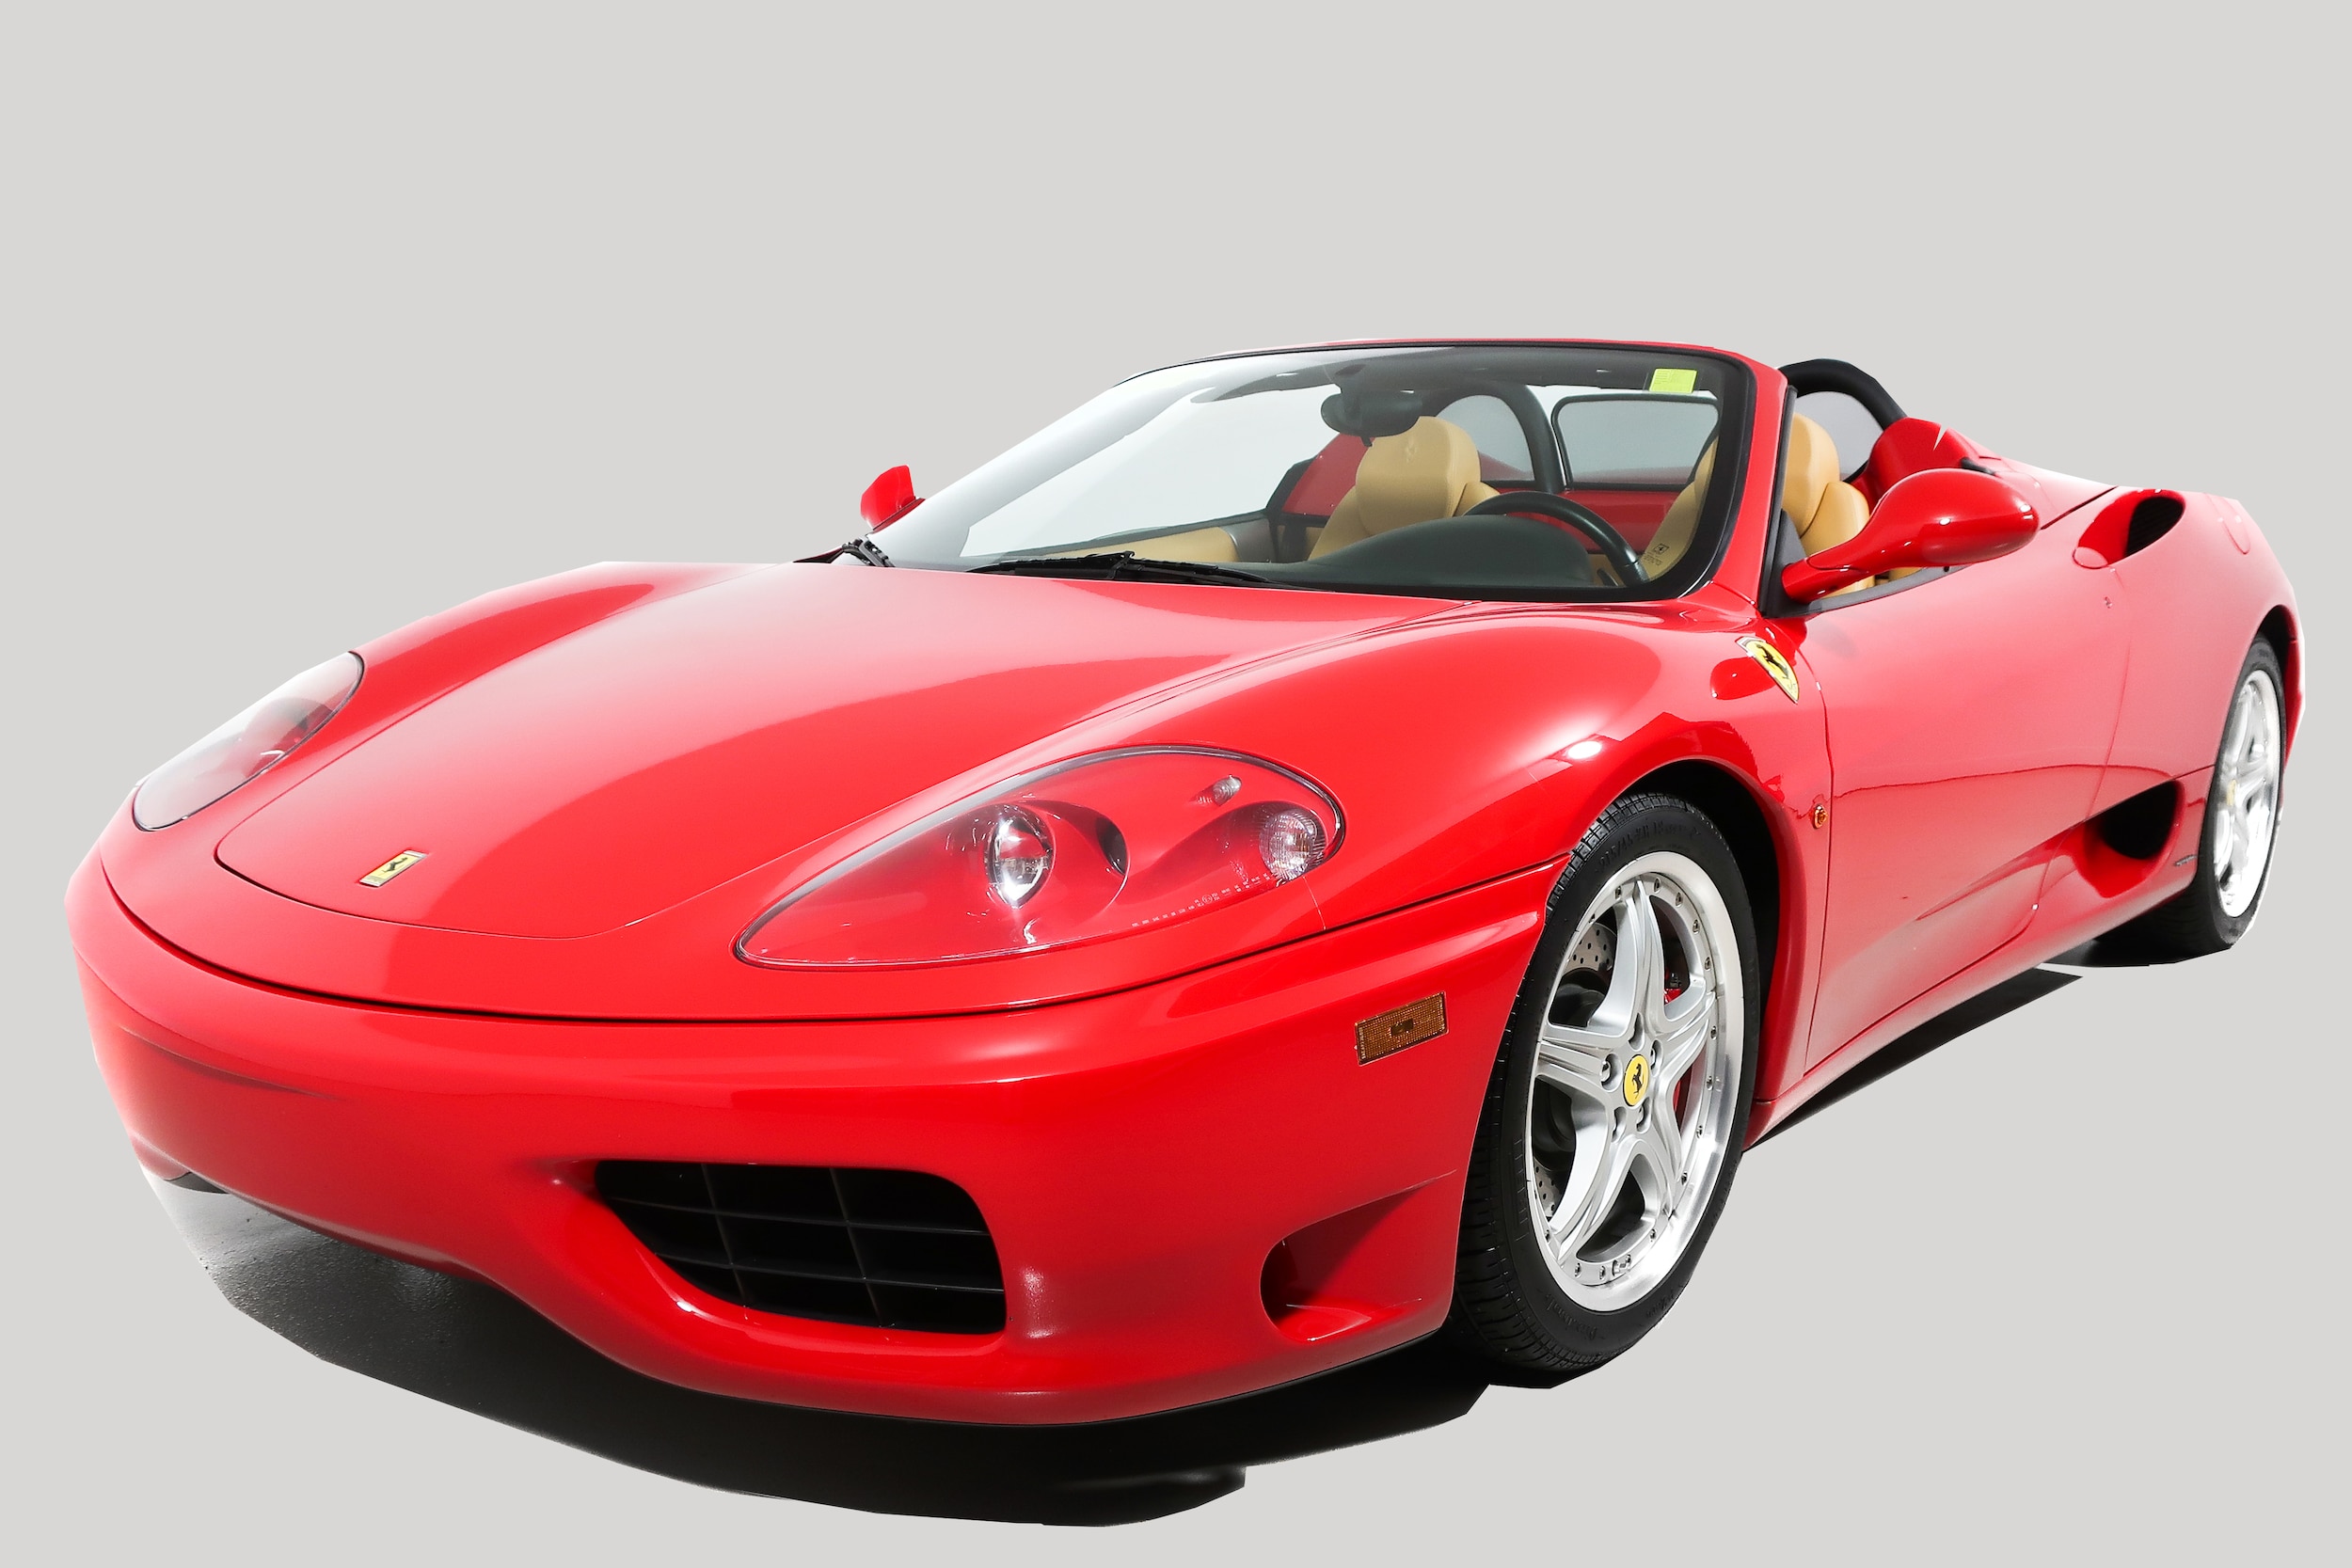 Used 2004 Ferrari 360 Modena For Sale | Norwood MA ZFFYT53A340138814